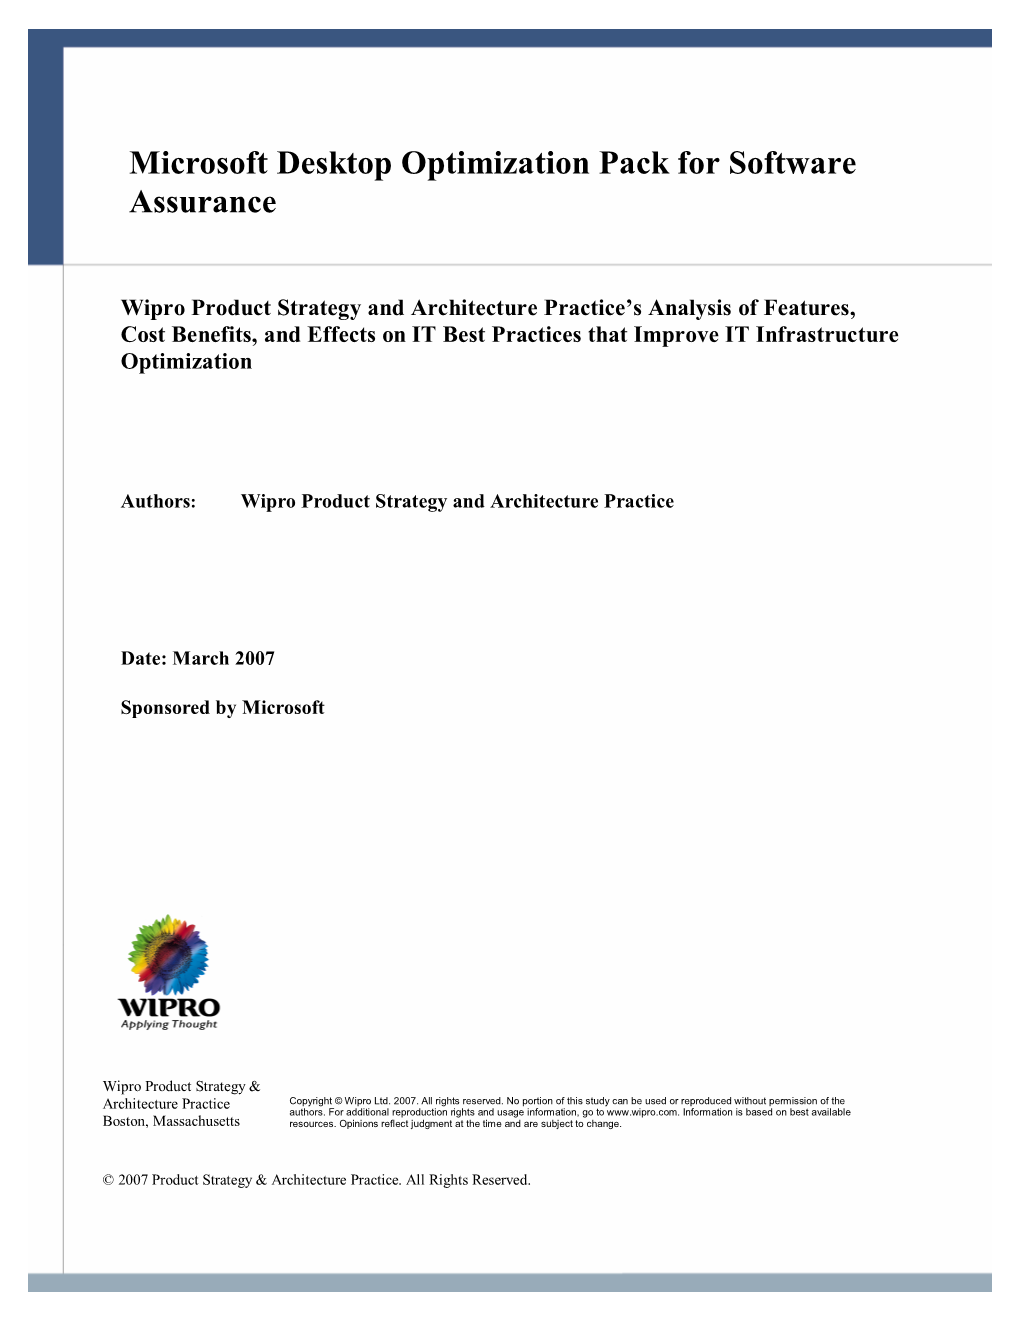 Microsoft Desktop Optimization Pack for Software Assurance 2